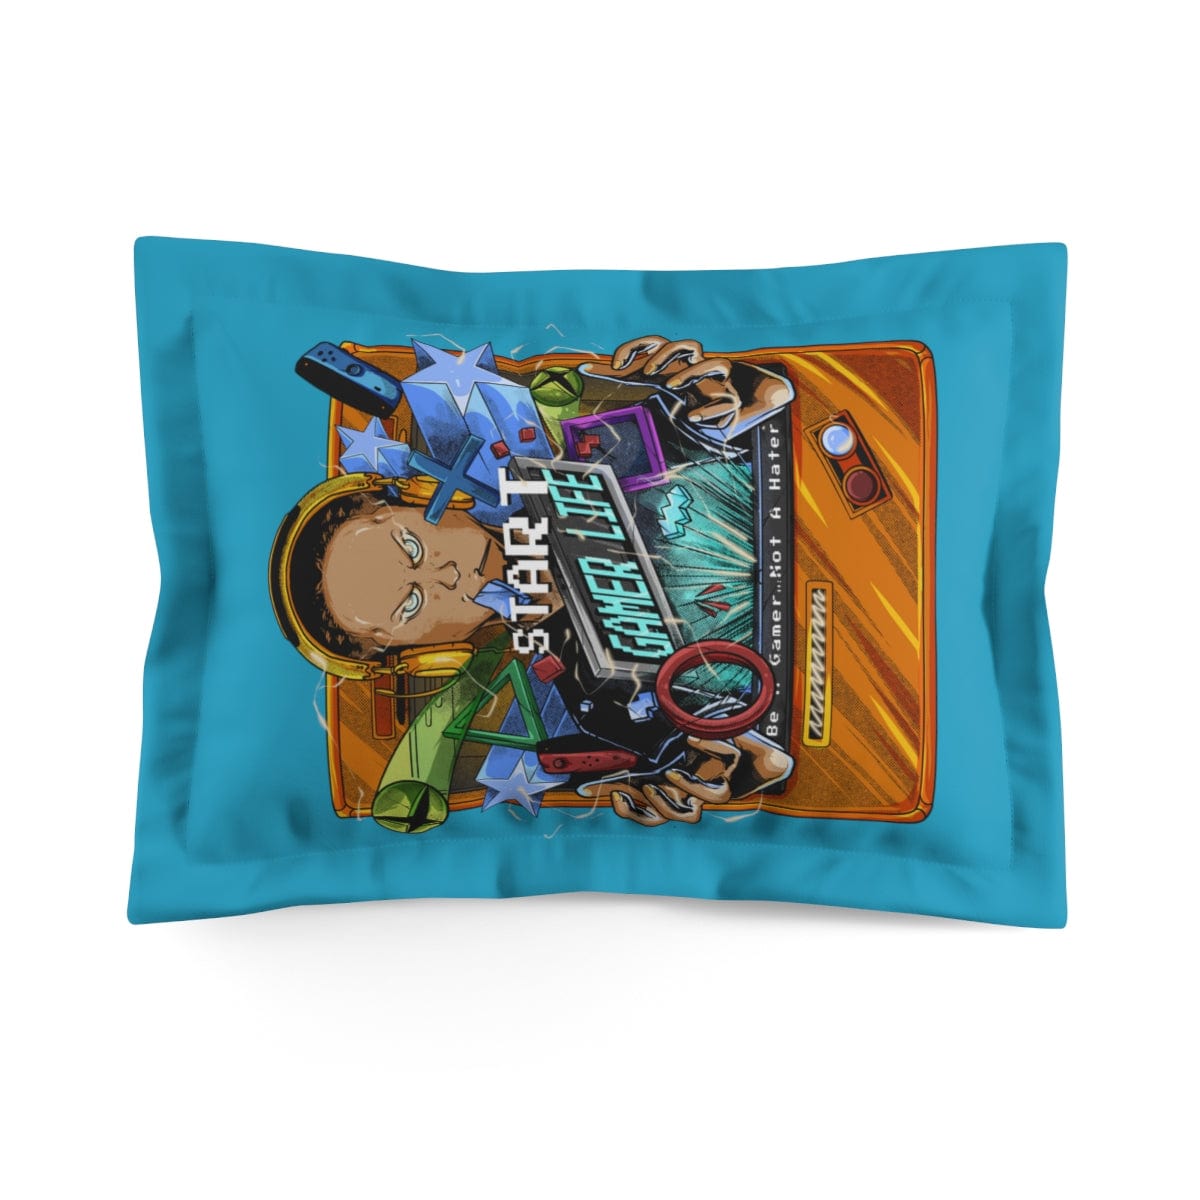 Player One Gamer Life | Microfiber Turquoise Pillow Sham